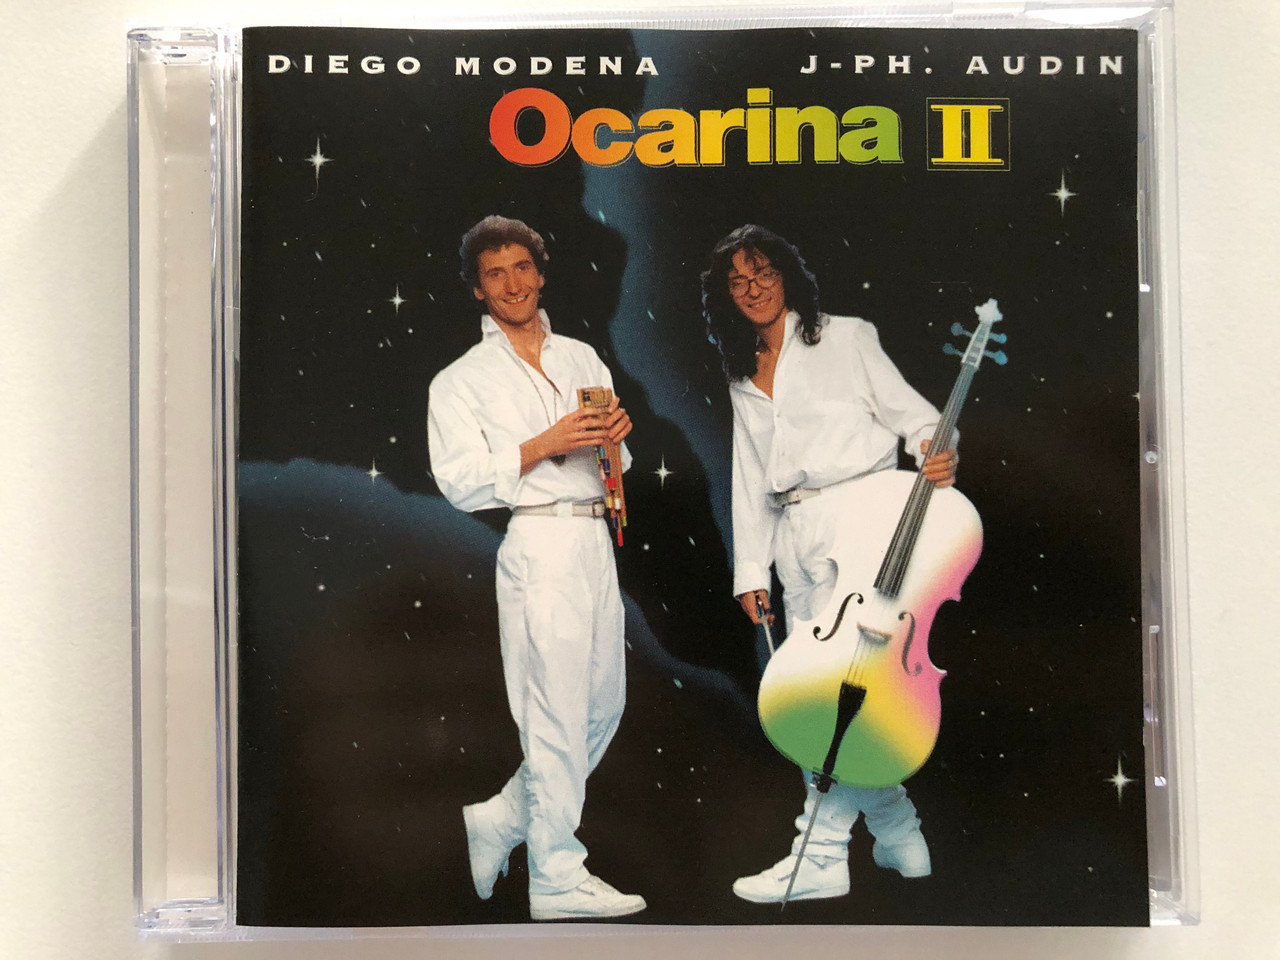 Diego Modena & J-Ph. Audin – Ocarina II / Polydor Audio CD 1993 Stereo /  521 884-2 - bibleinmylanguage